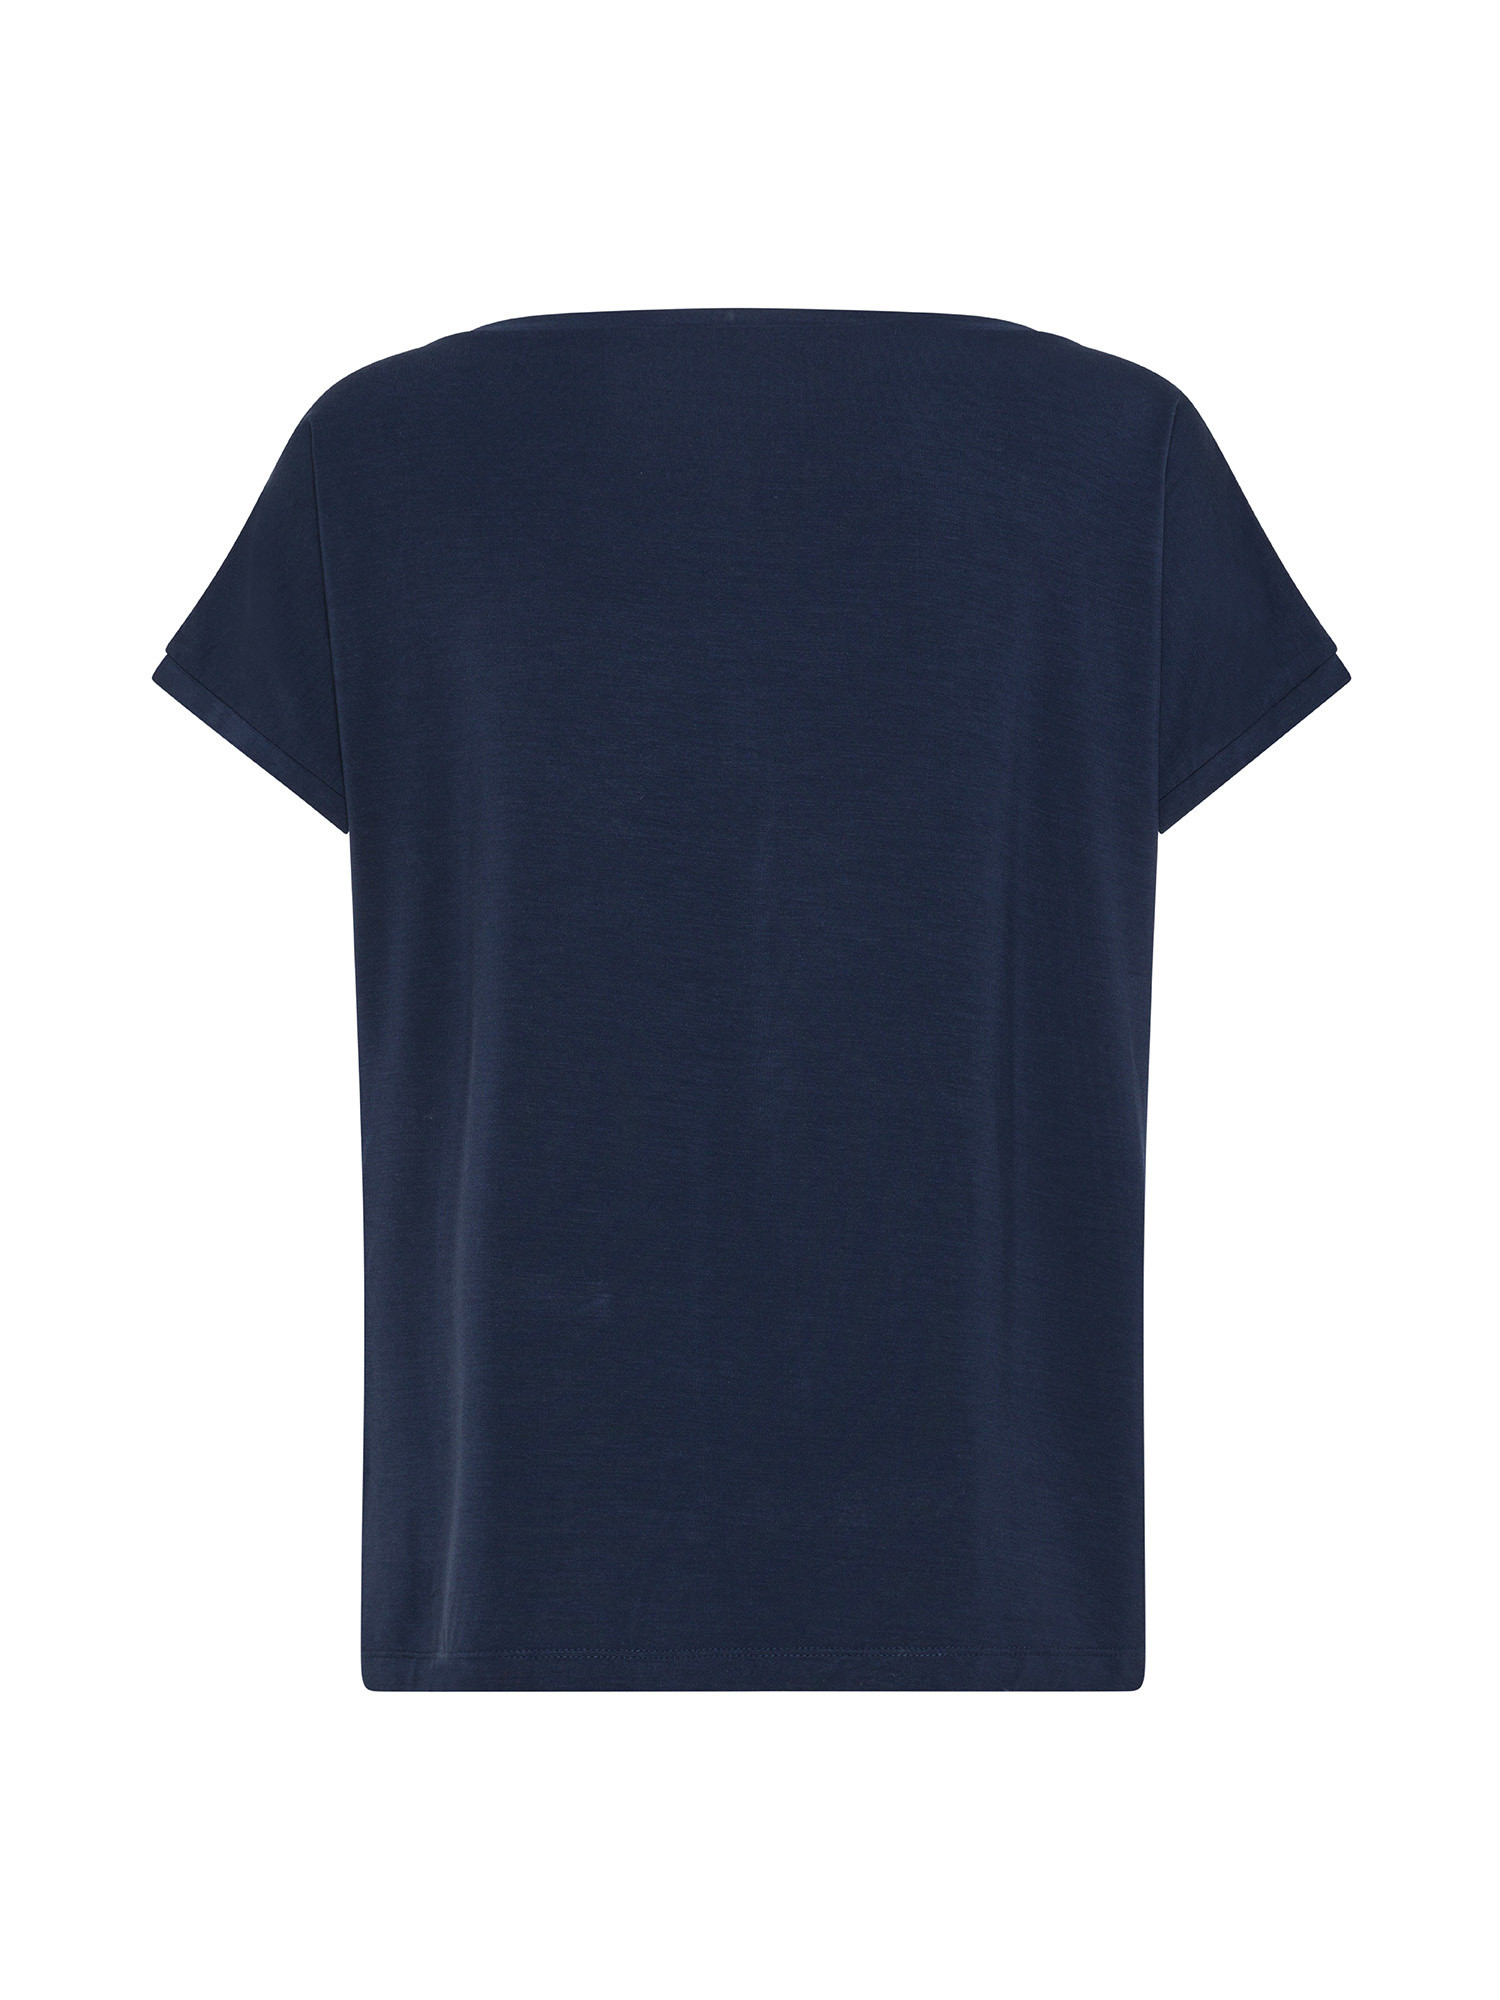 Bamboo viscose T-shirt, Navy Blue, large image number 1